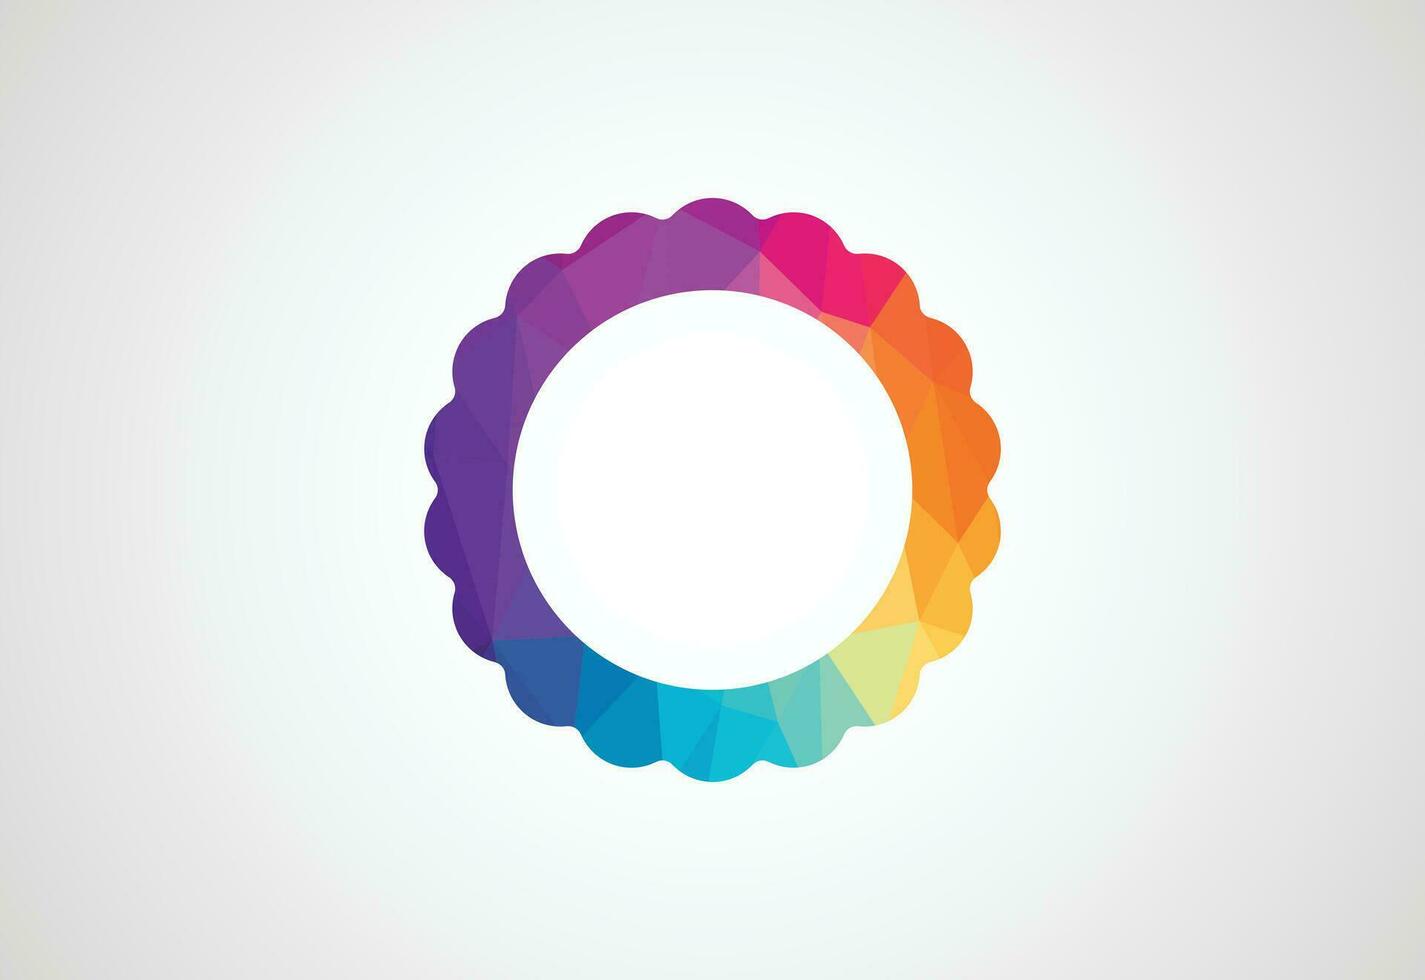 Low Poly and Sun logo, vector design concept